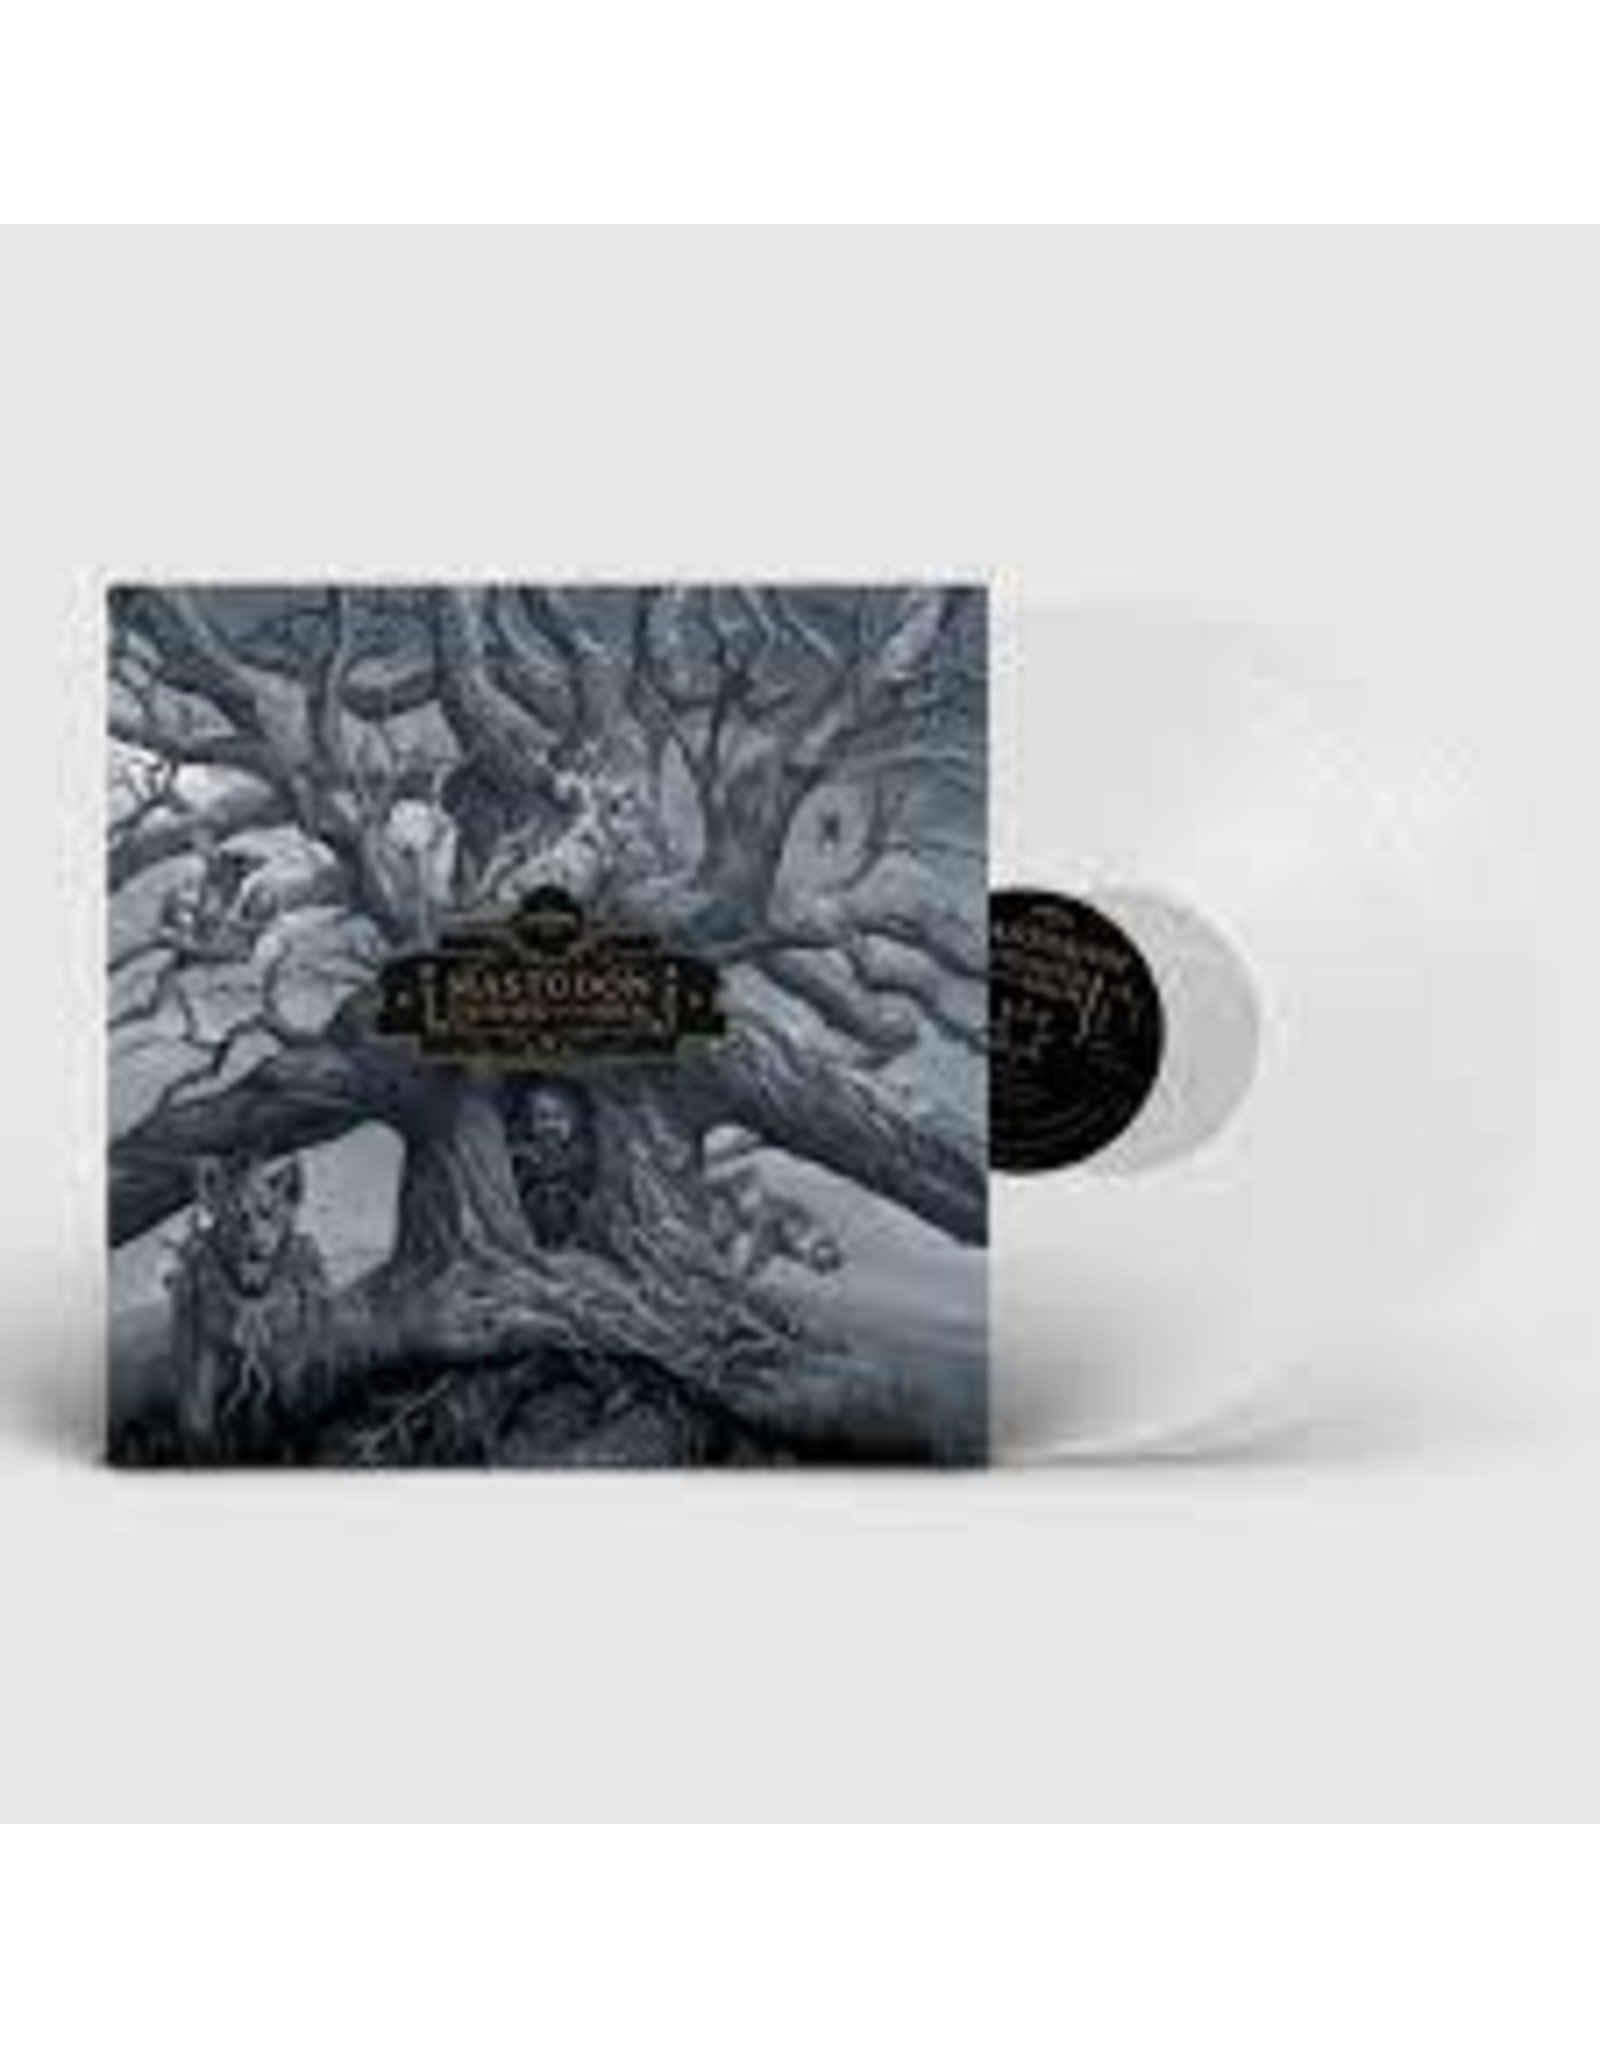 Mastodon - Hushed And Grim LM ED CLEAR VINYL 2 Disc LP